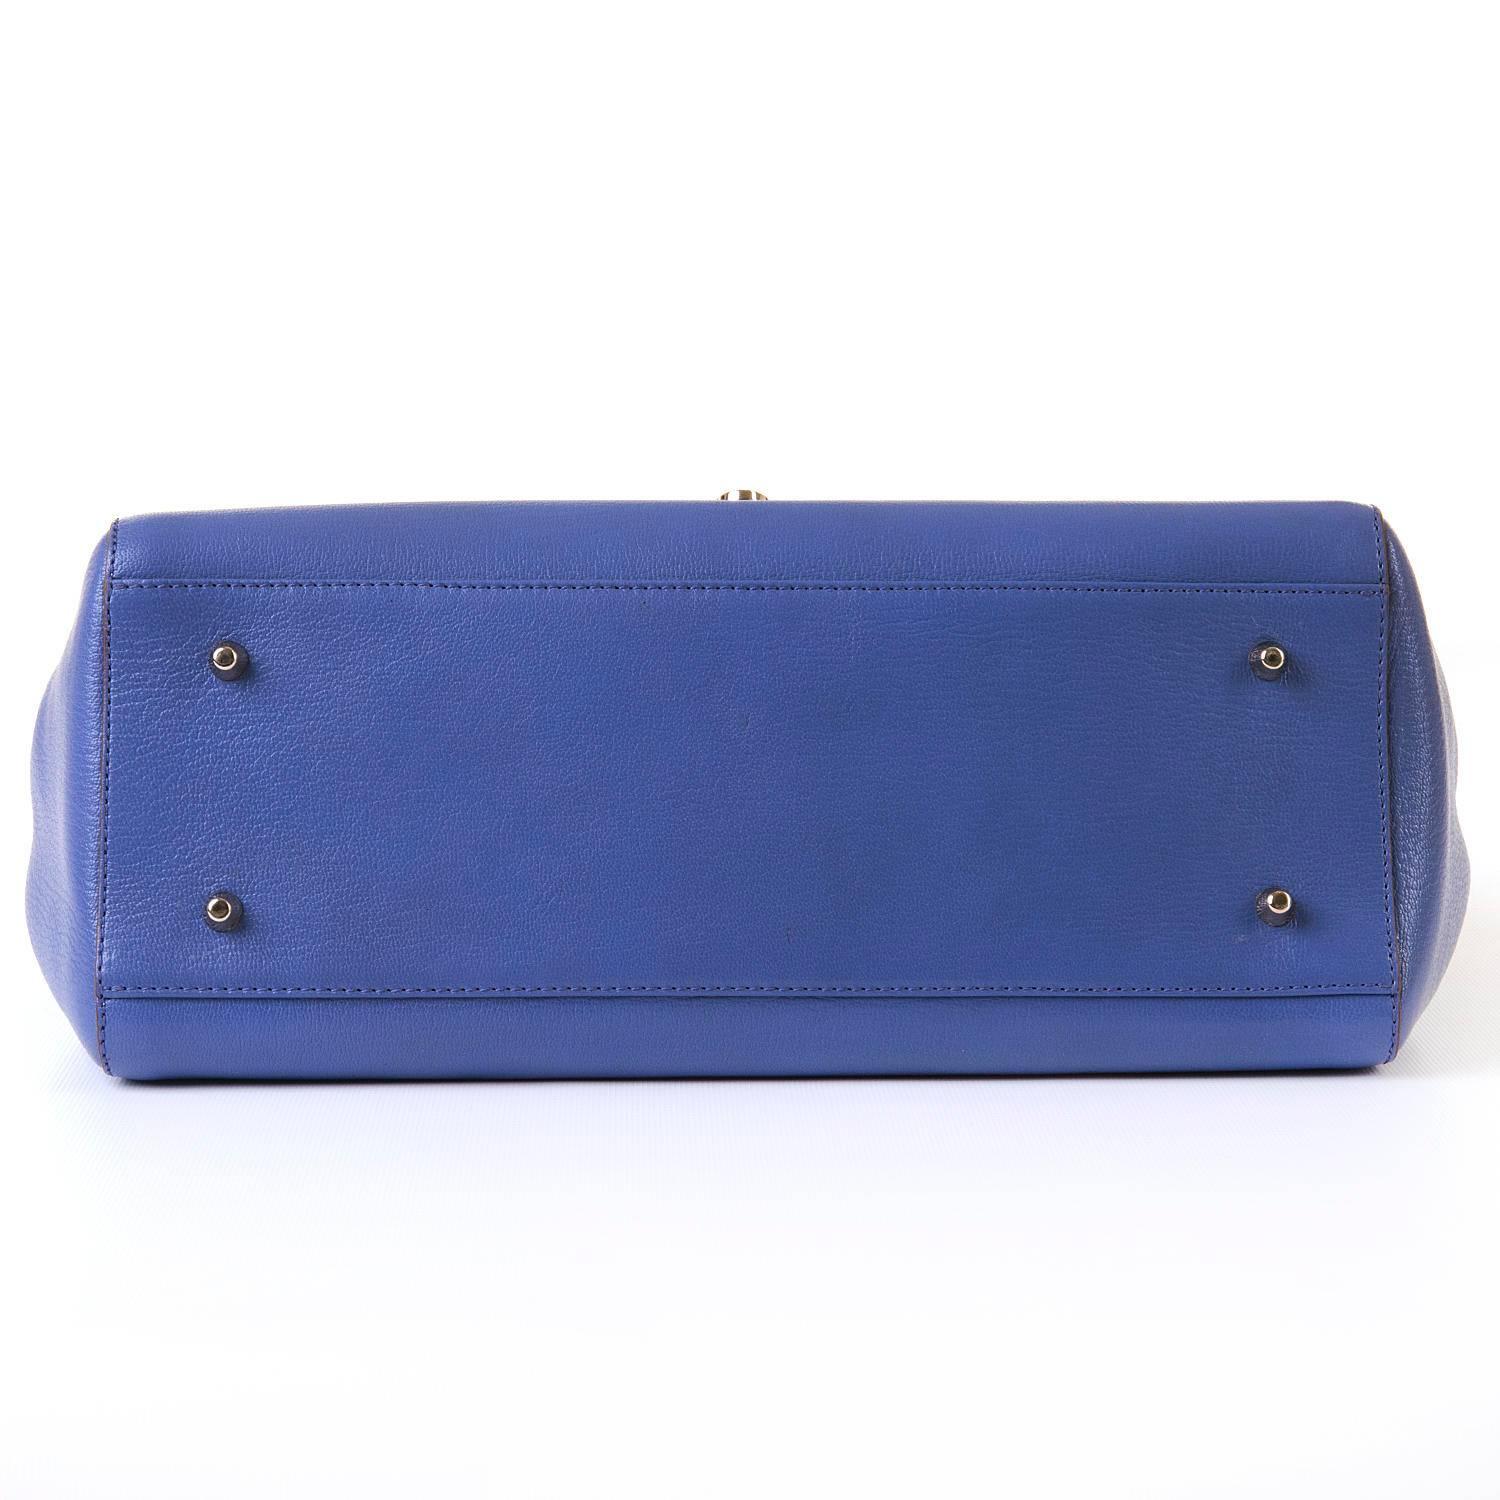 NEW & UNUSED Fabulous Anya Hindmarsh 'Bathurst' GM Bag & Matching Purse For Sale 2